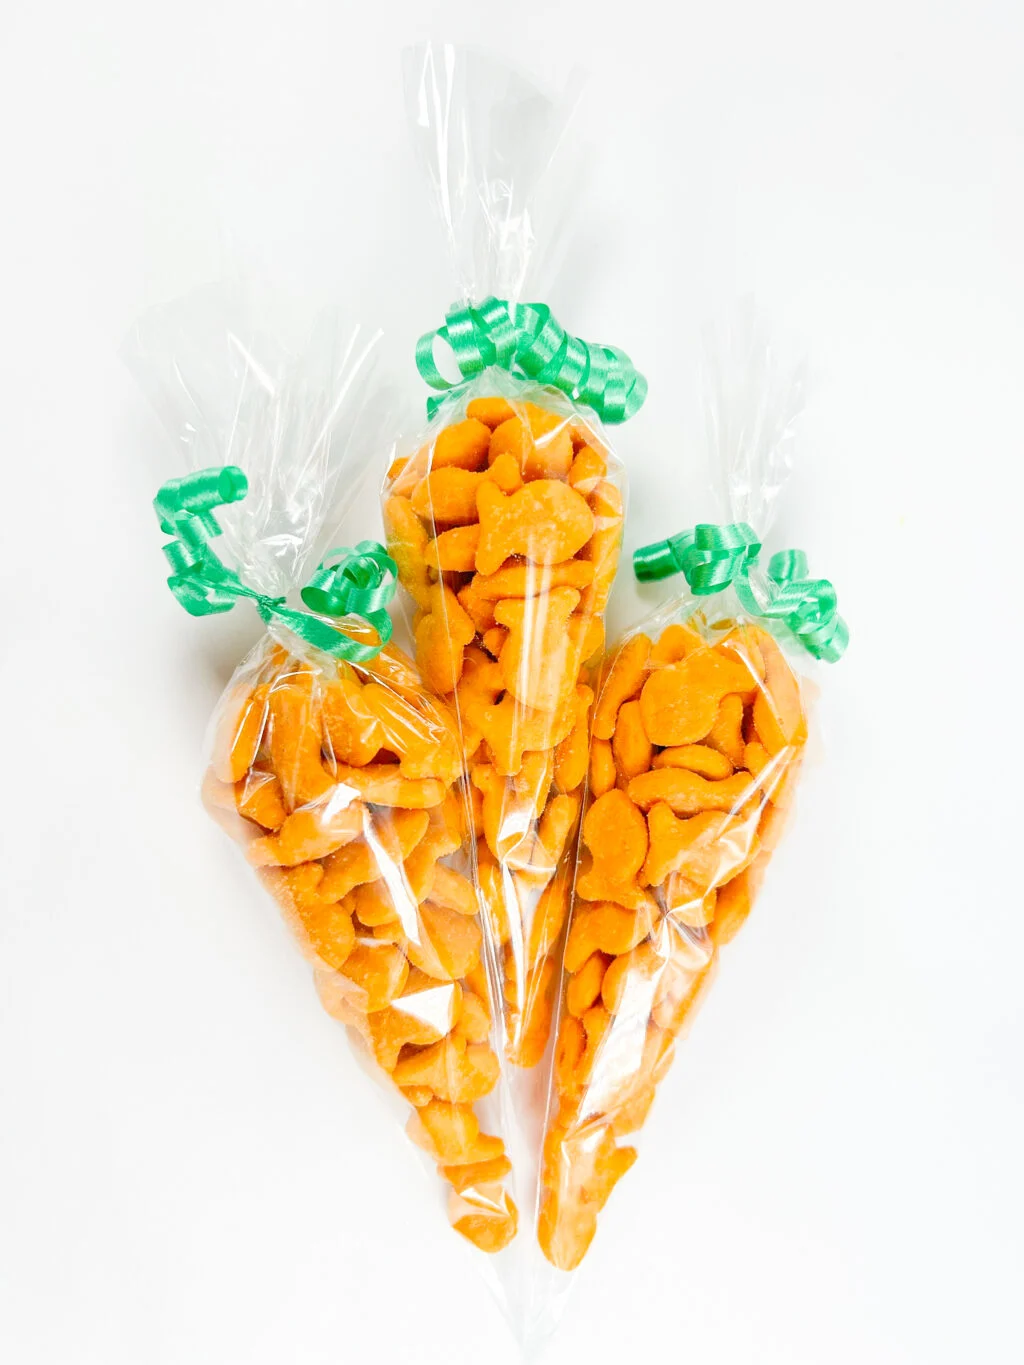 goldfish carrot treat bags on white table